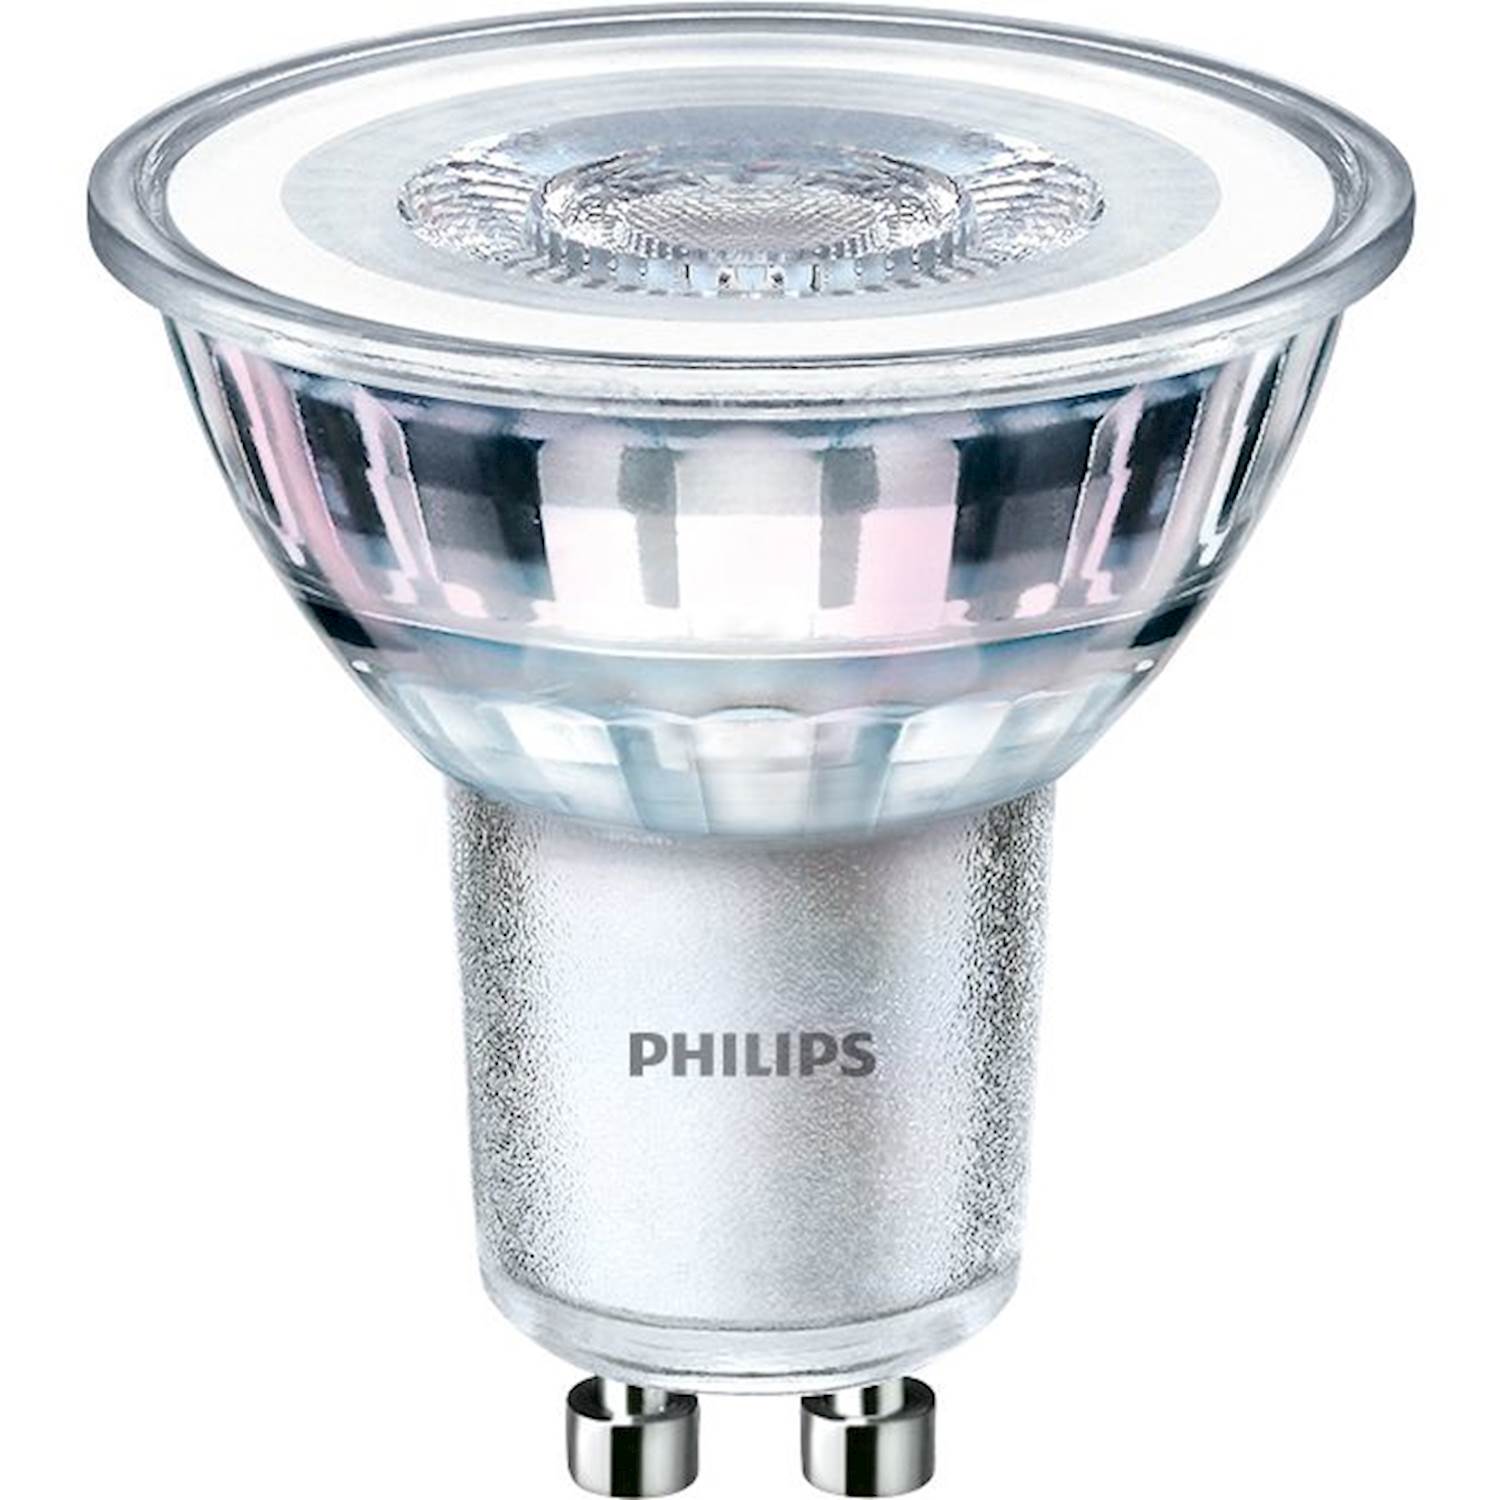 Philips LED Classic 25w spot nd